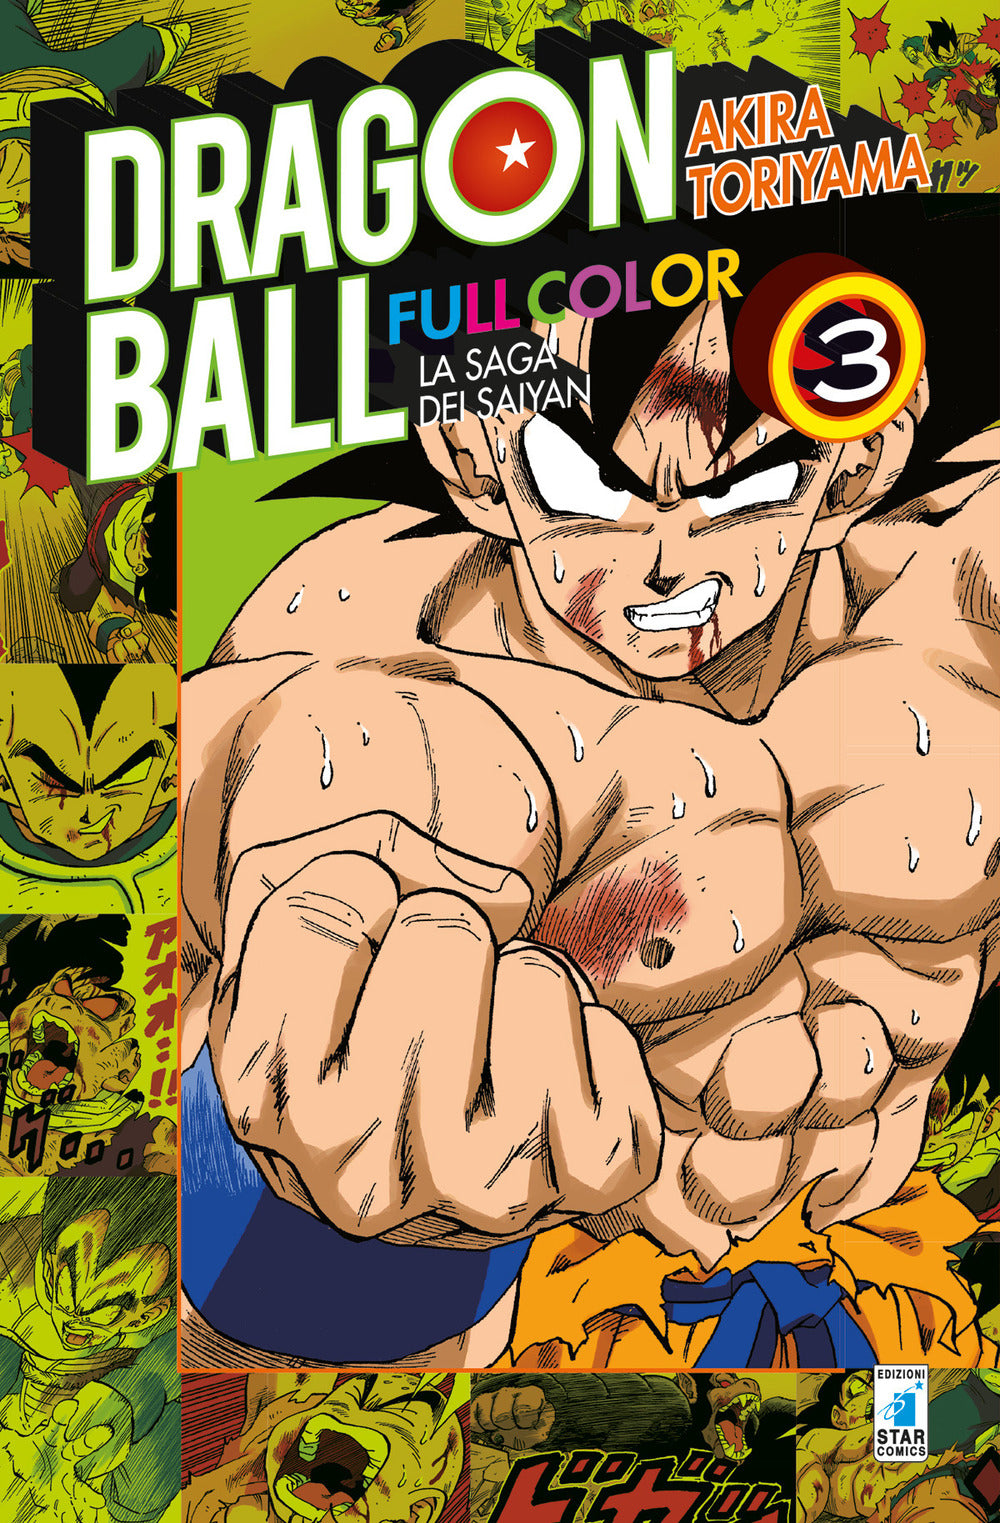 La saga dei Saiyan. Dragon Ball full color. Vol. 3